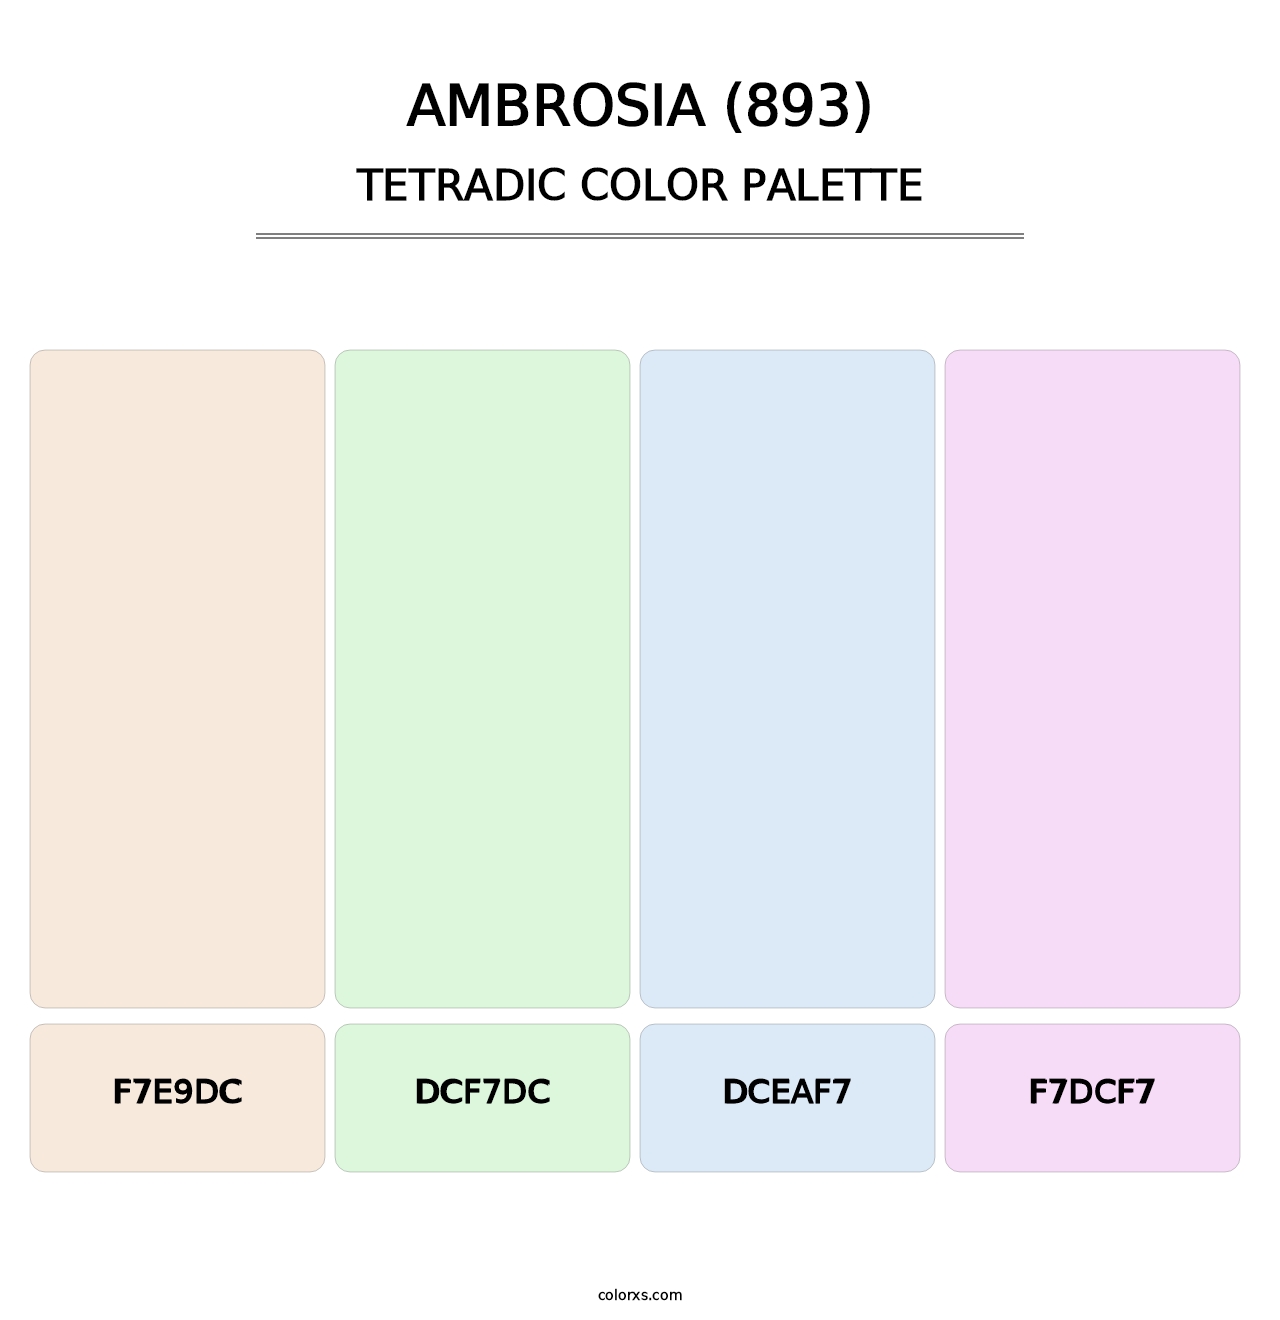 Ambrosia (893) - Tetradic Color Palette